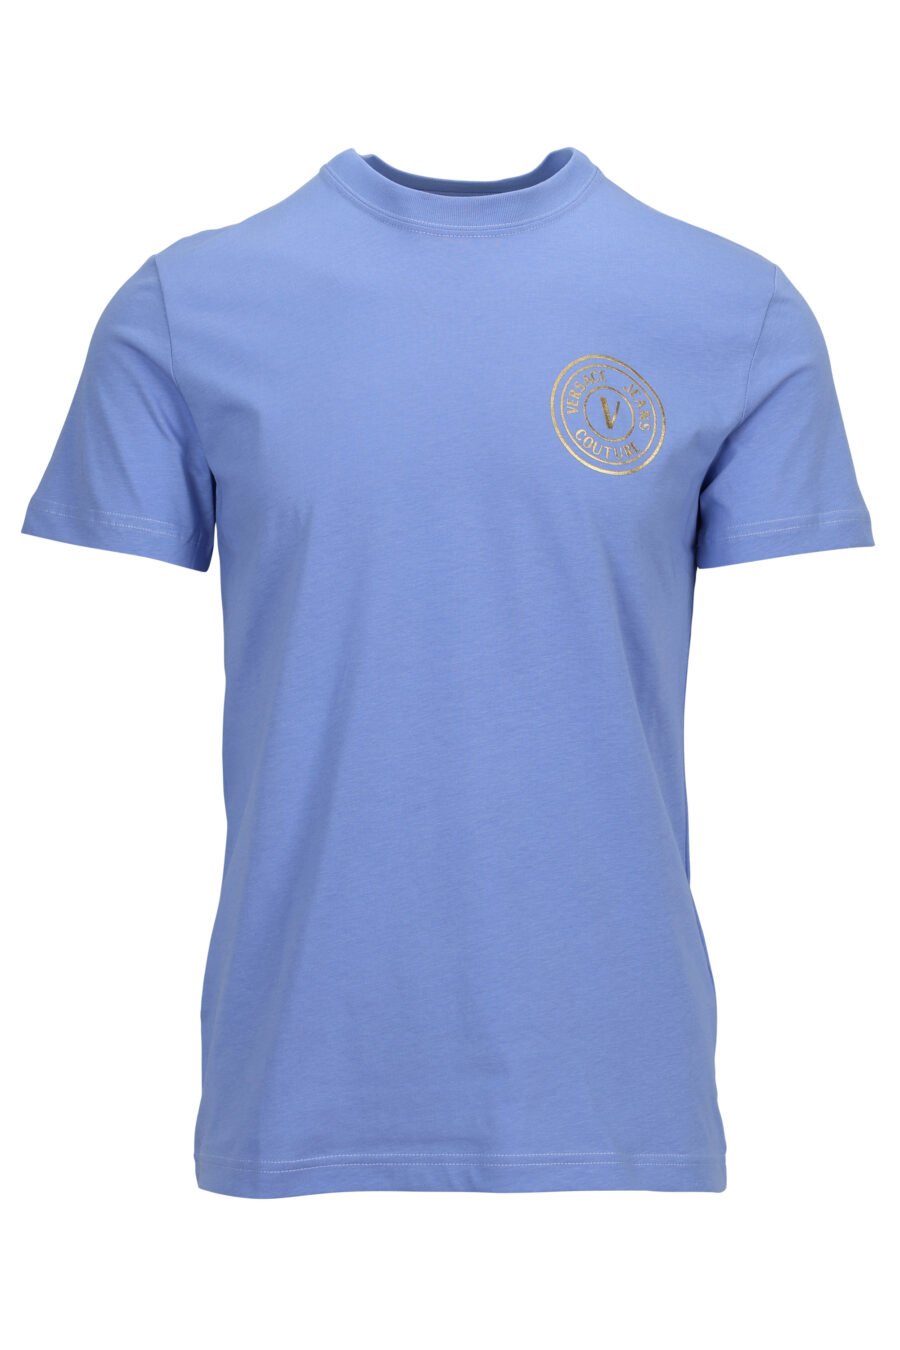 T-shirt azul clara com mini-logotipo circular brilhante - 8052019597455